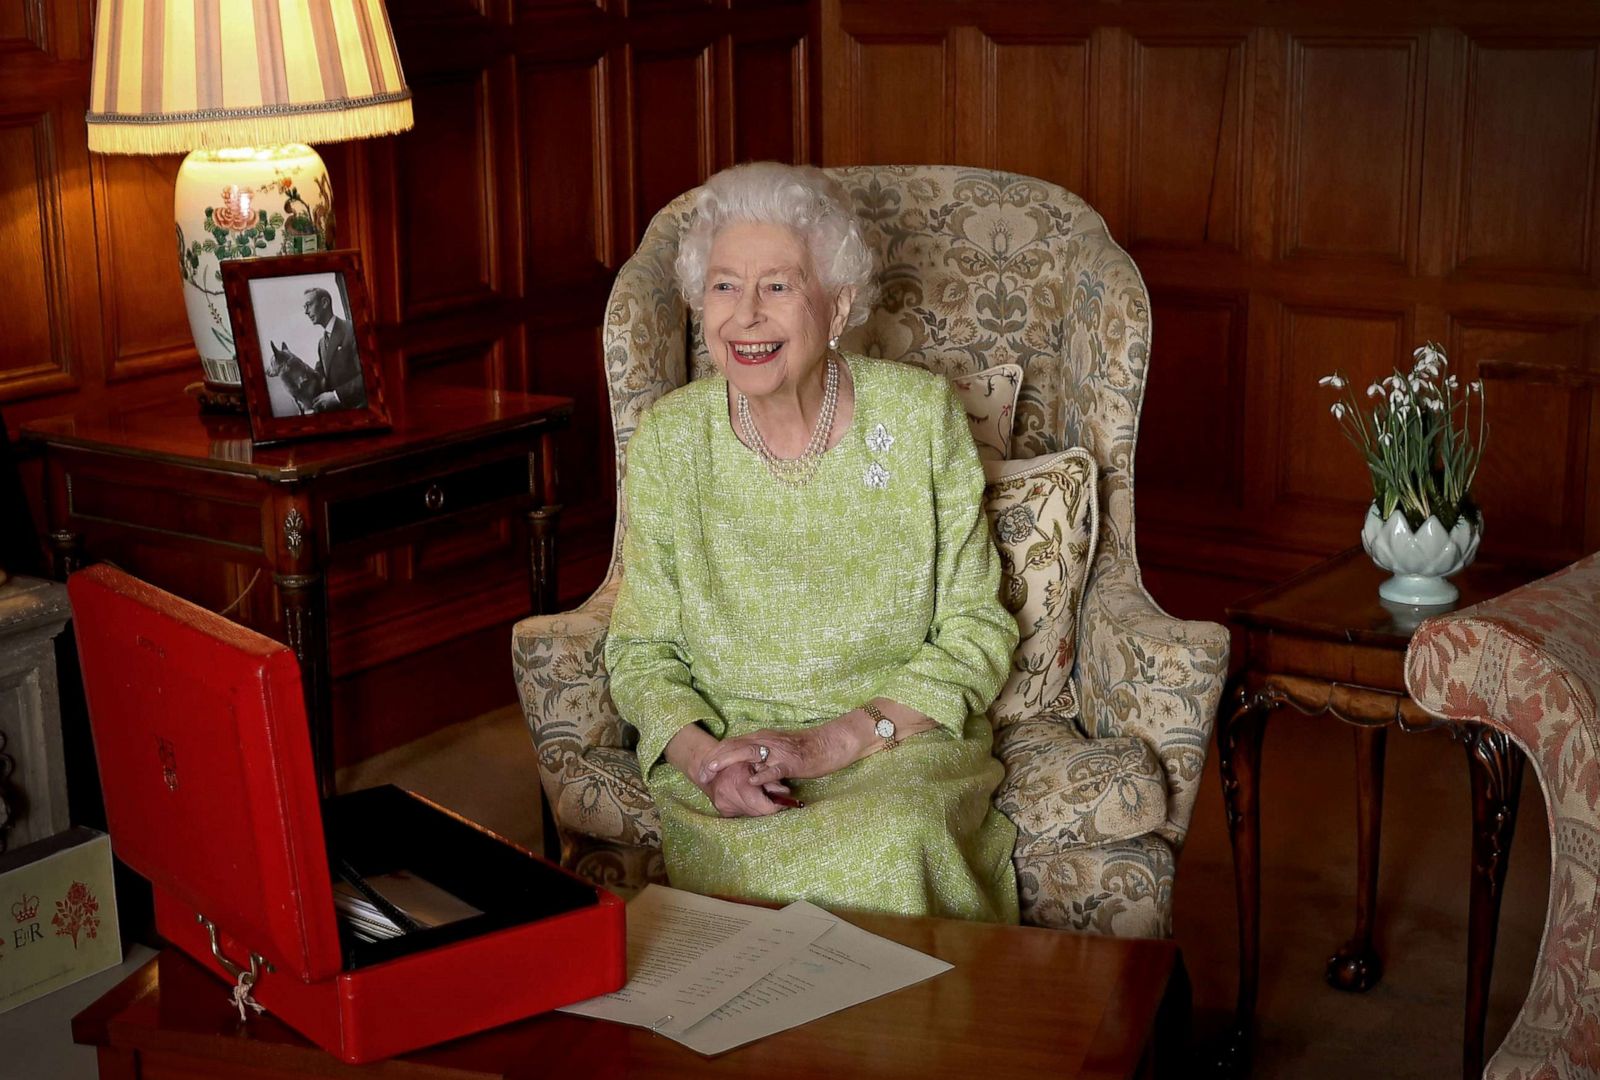 Queen Elizabeth II's Life Through the Years Photos